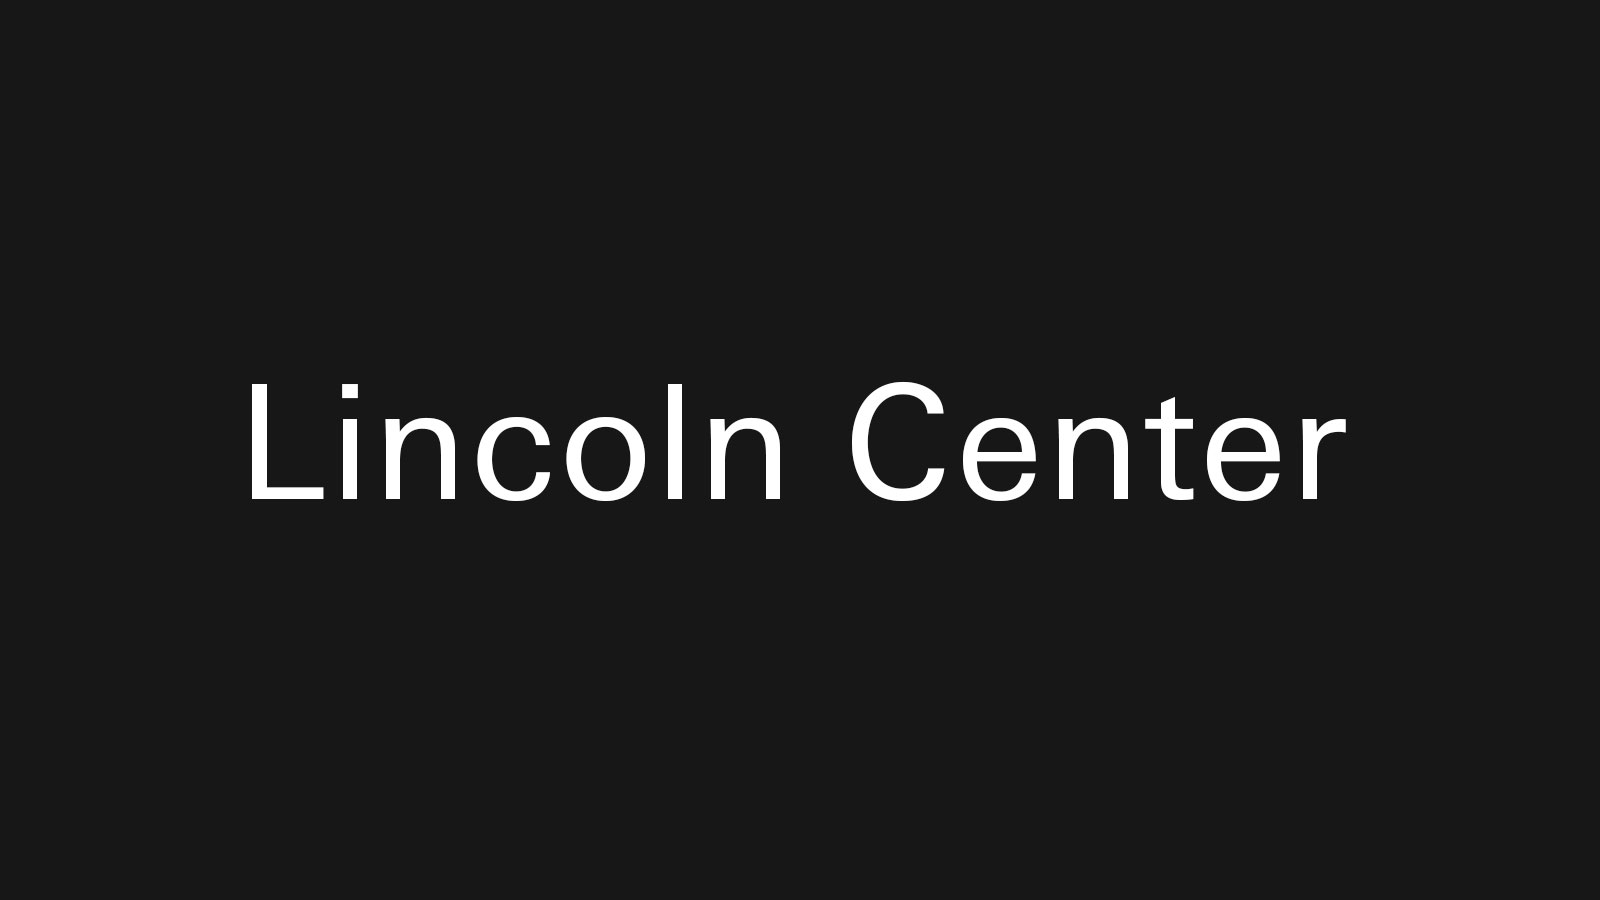 (c) Lincolncenter.org